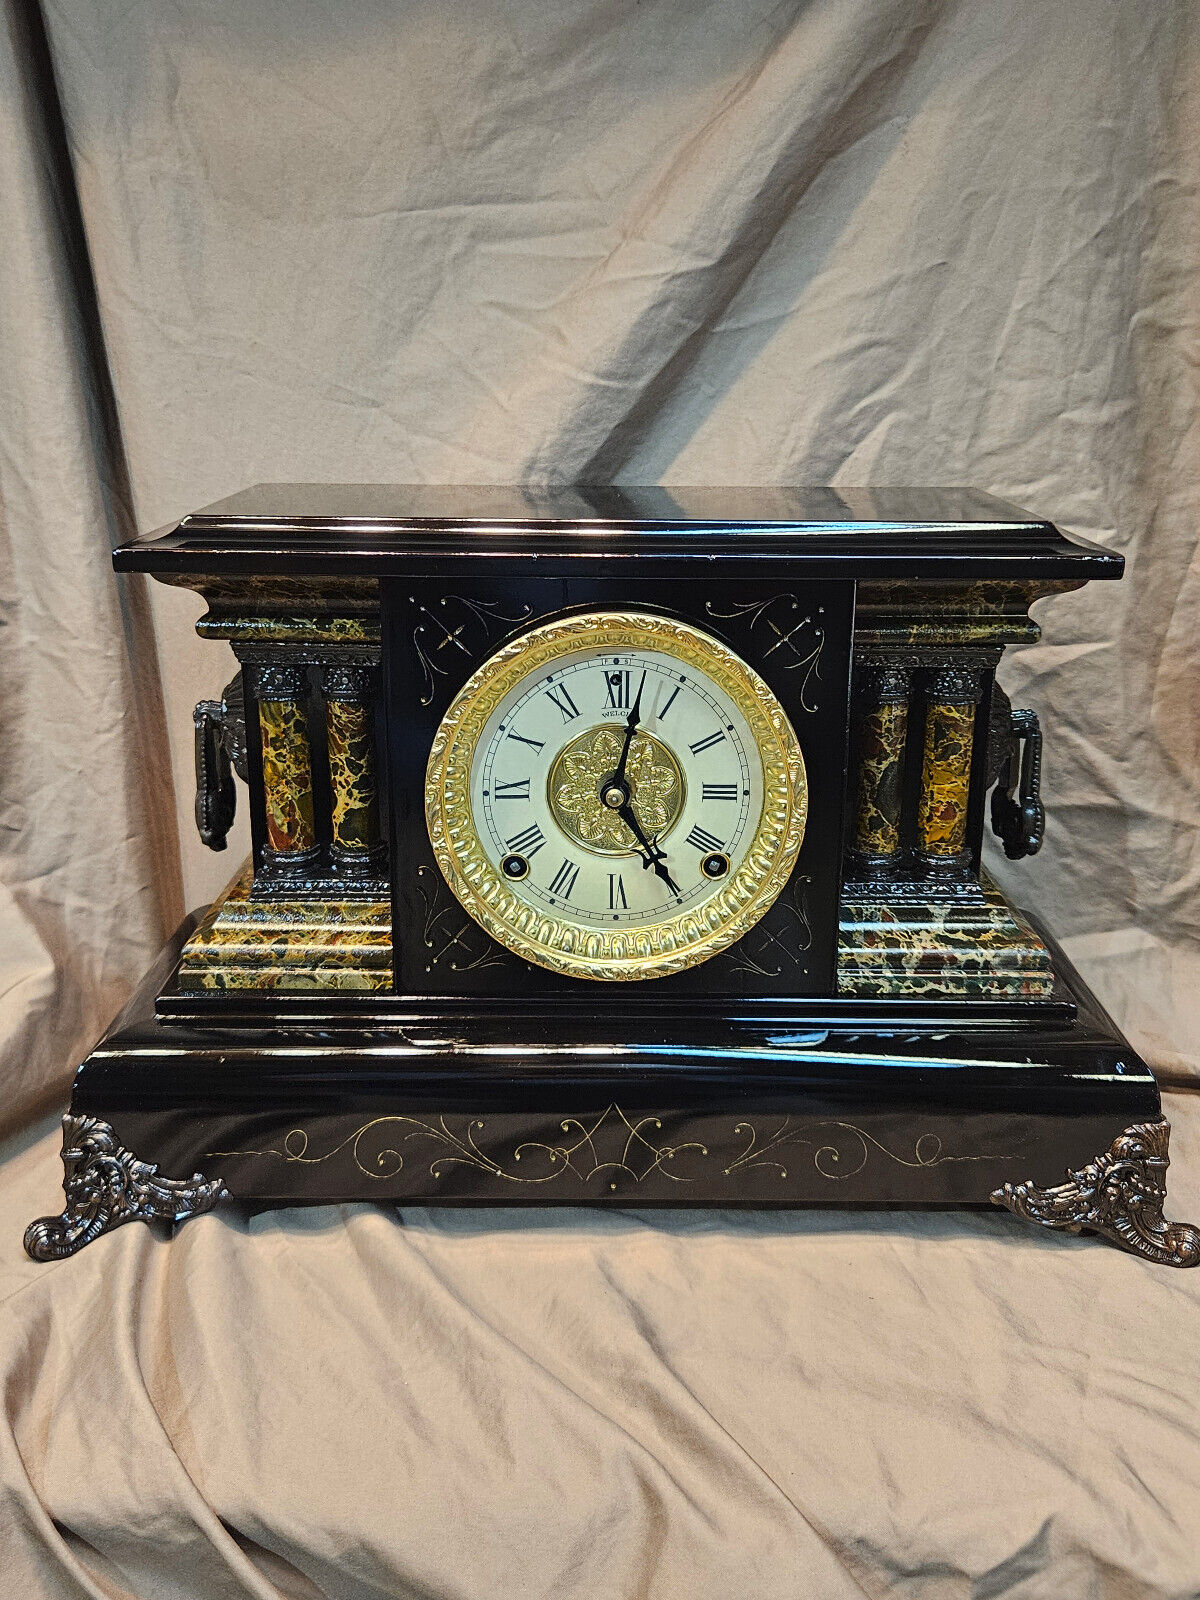 Restored Antique E. N. Welch Sessions Mantel Clock circa 1890s Original Movement